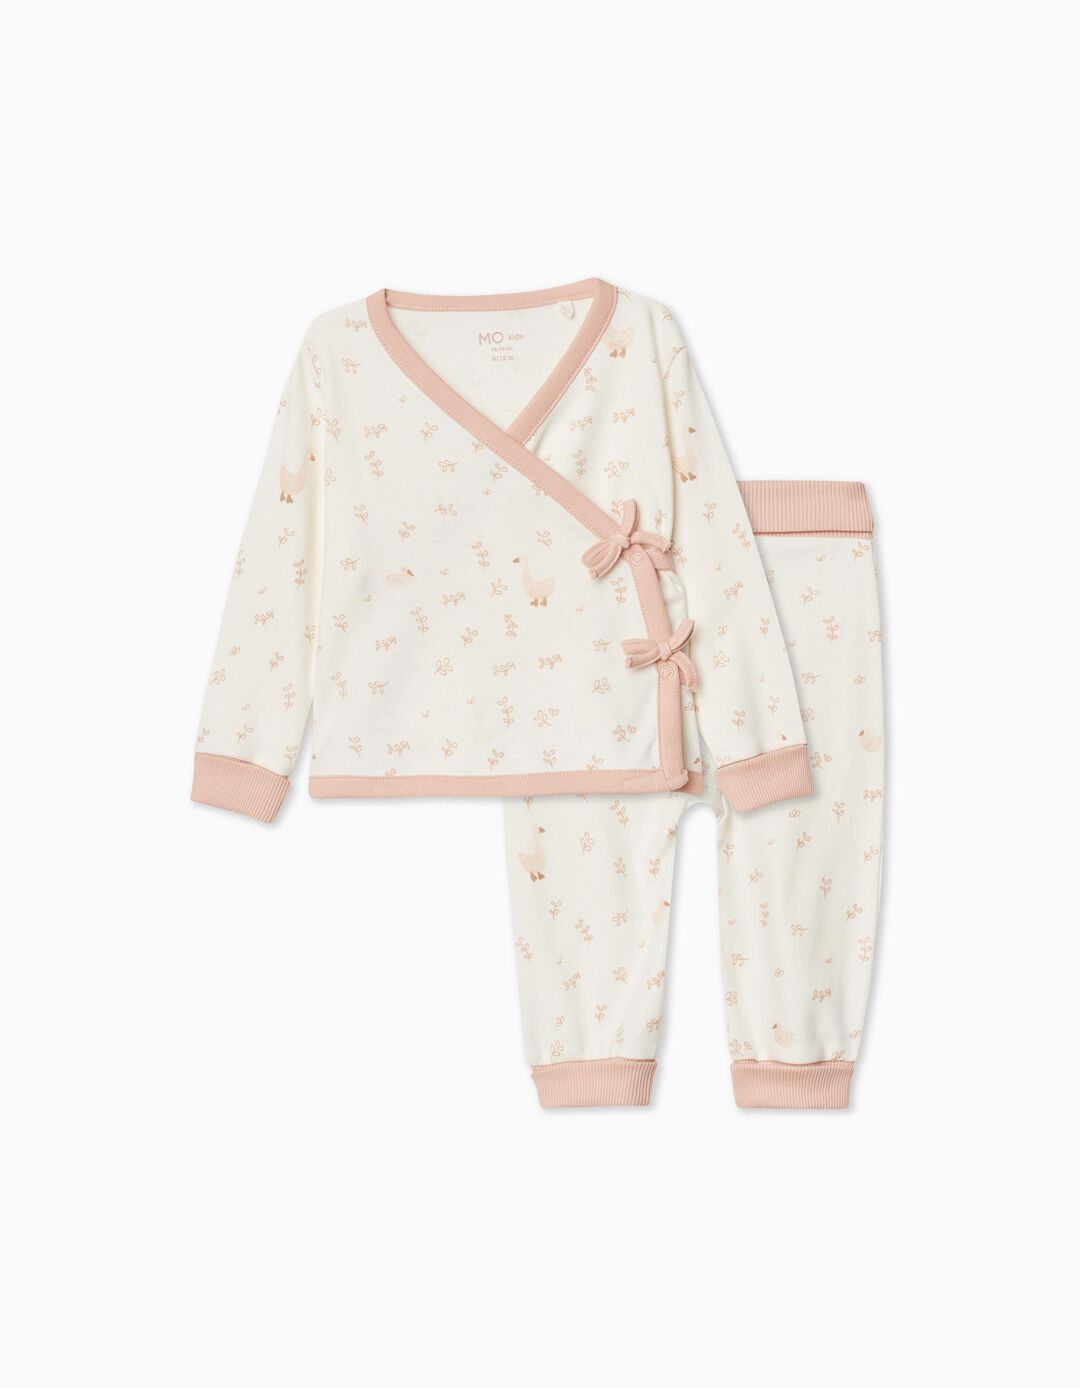 Printed Pajamas, Baby Girl, Multiple colors